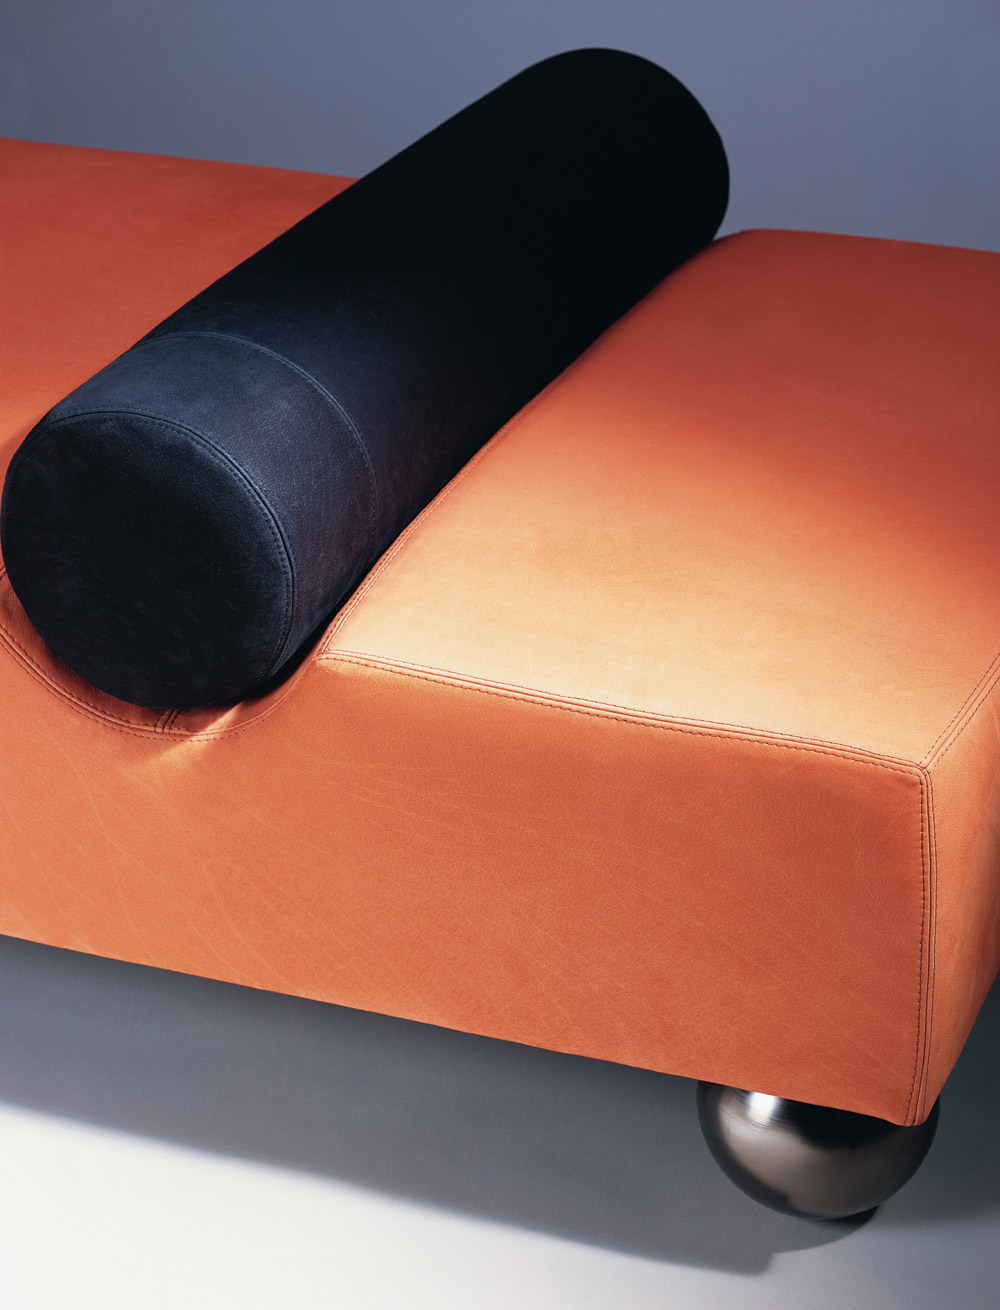 Custom furniture design luxury seating meridienne psy orange black leather close up